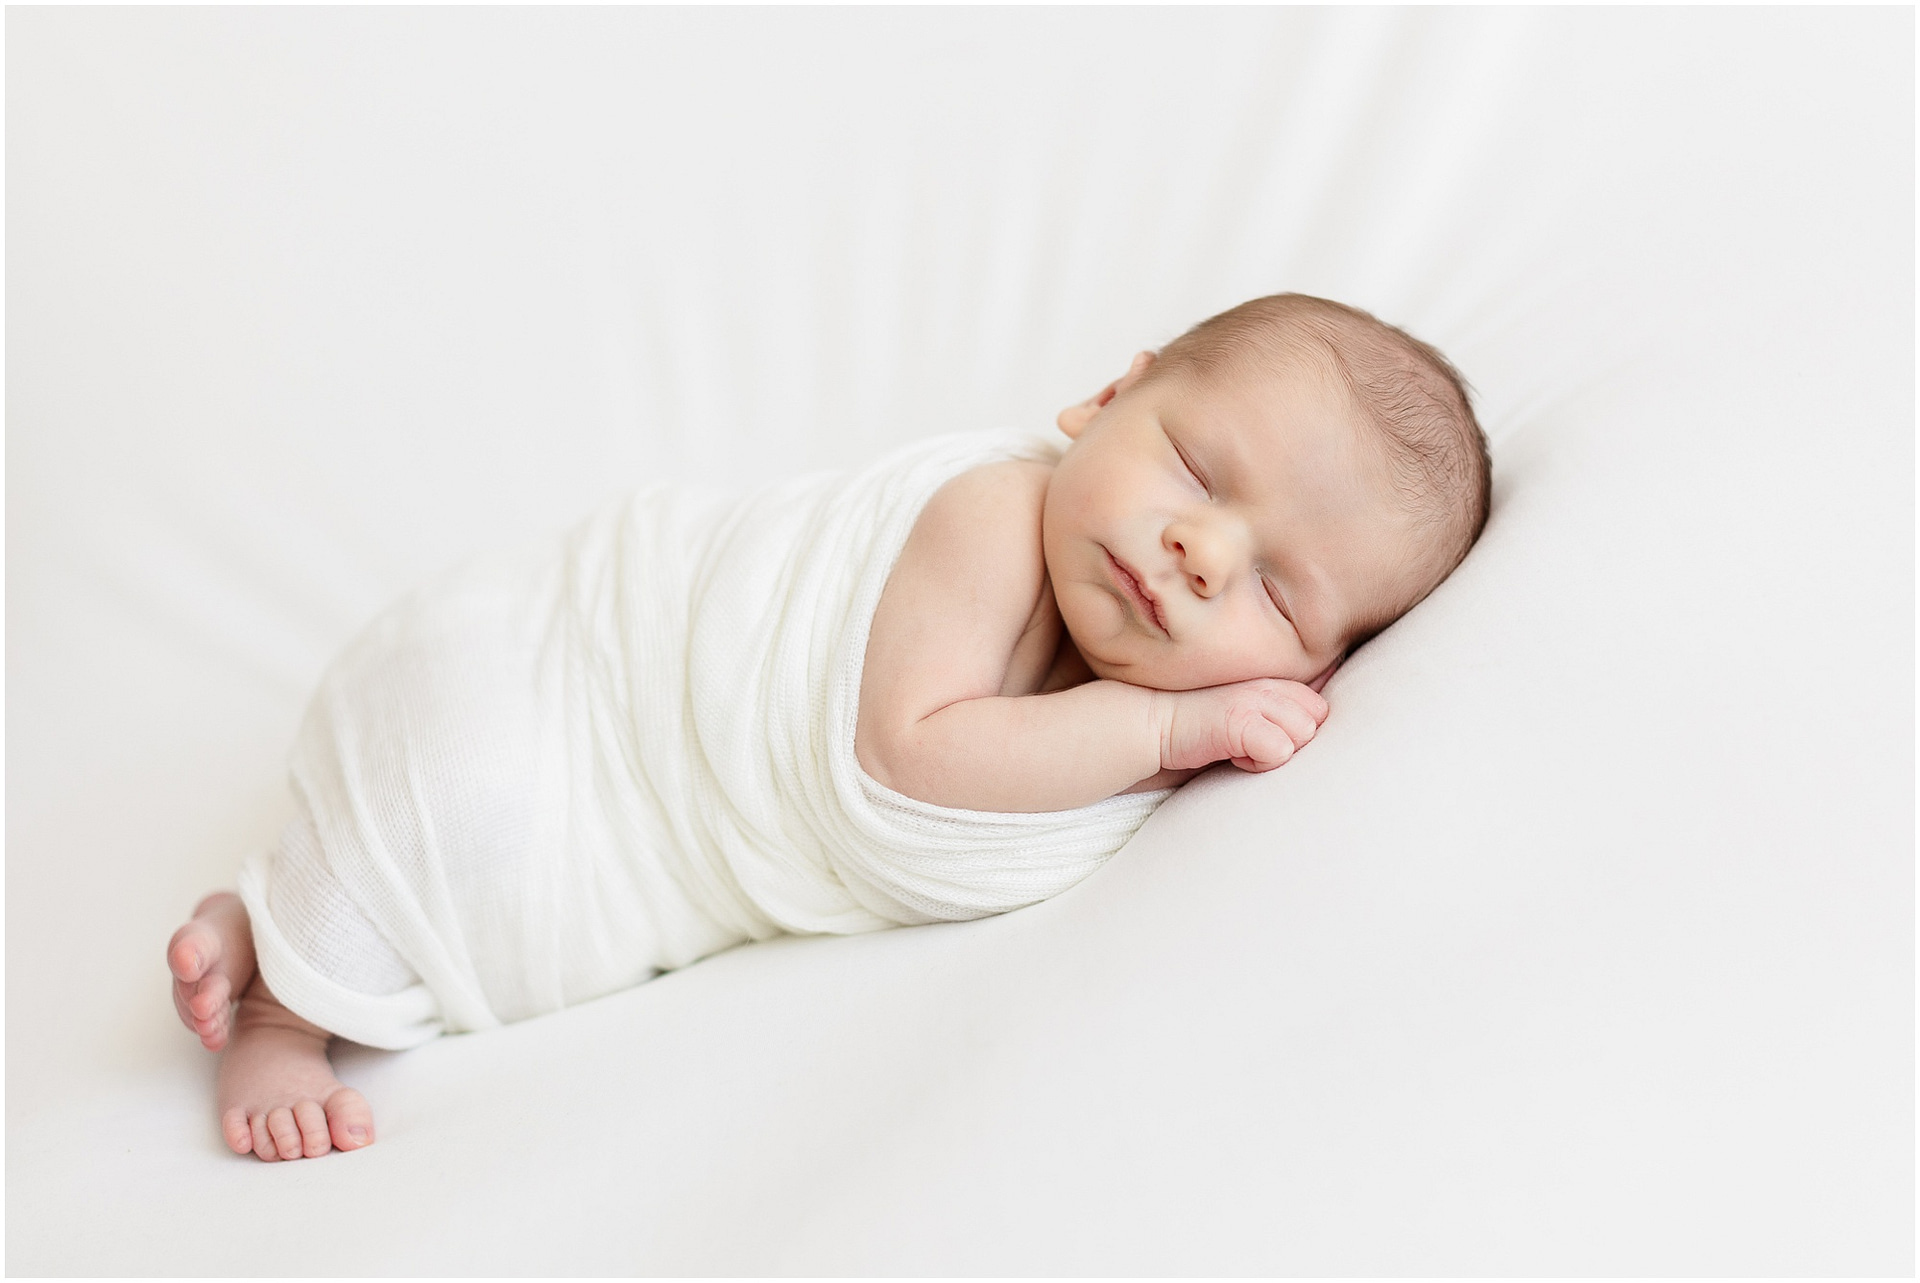 Baby boy peacefully sleeps during Boise newborn session. Photo by Tiffany Hix Photography.